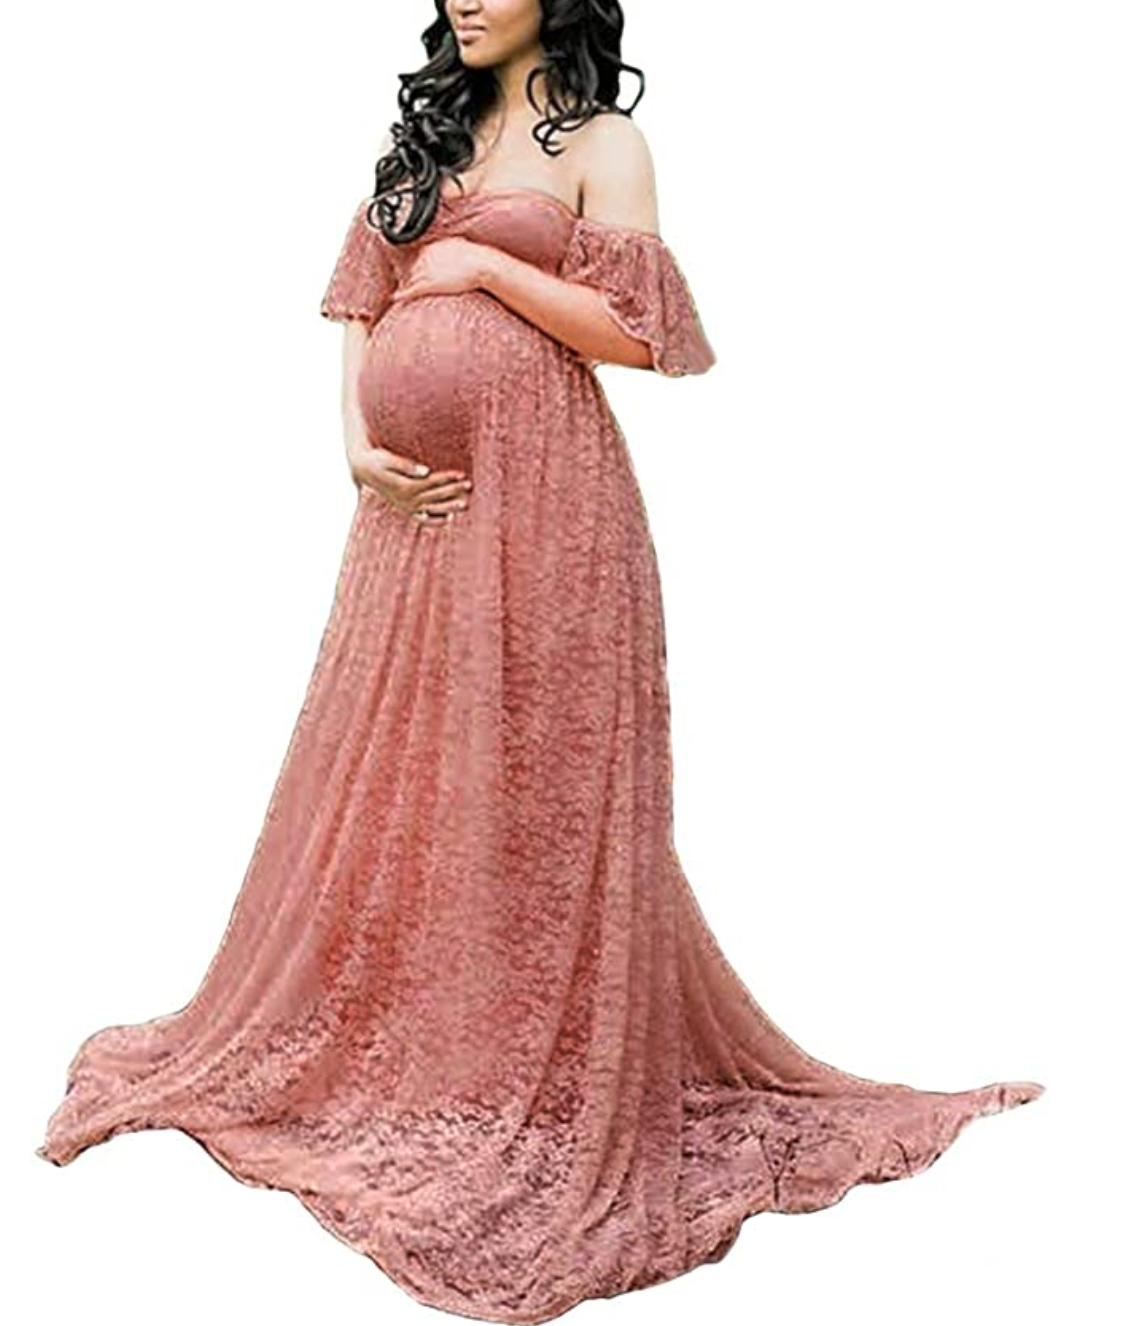 Maternity Dress for Photoshoot